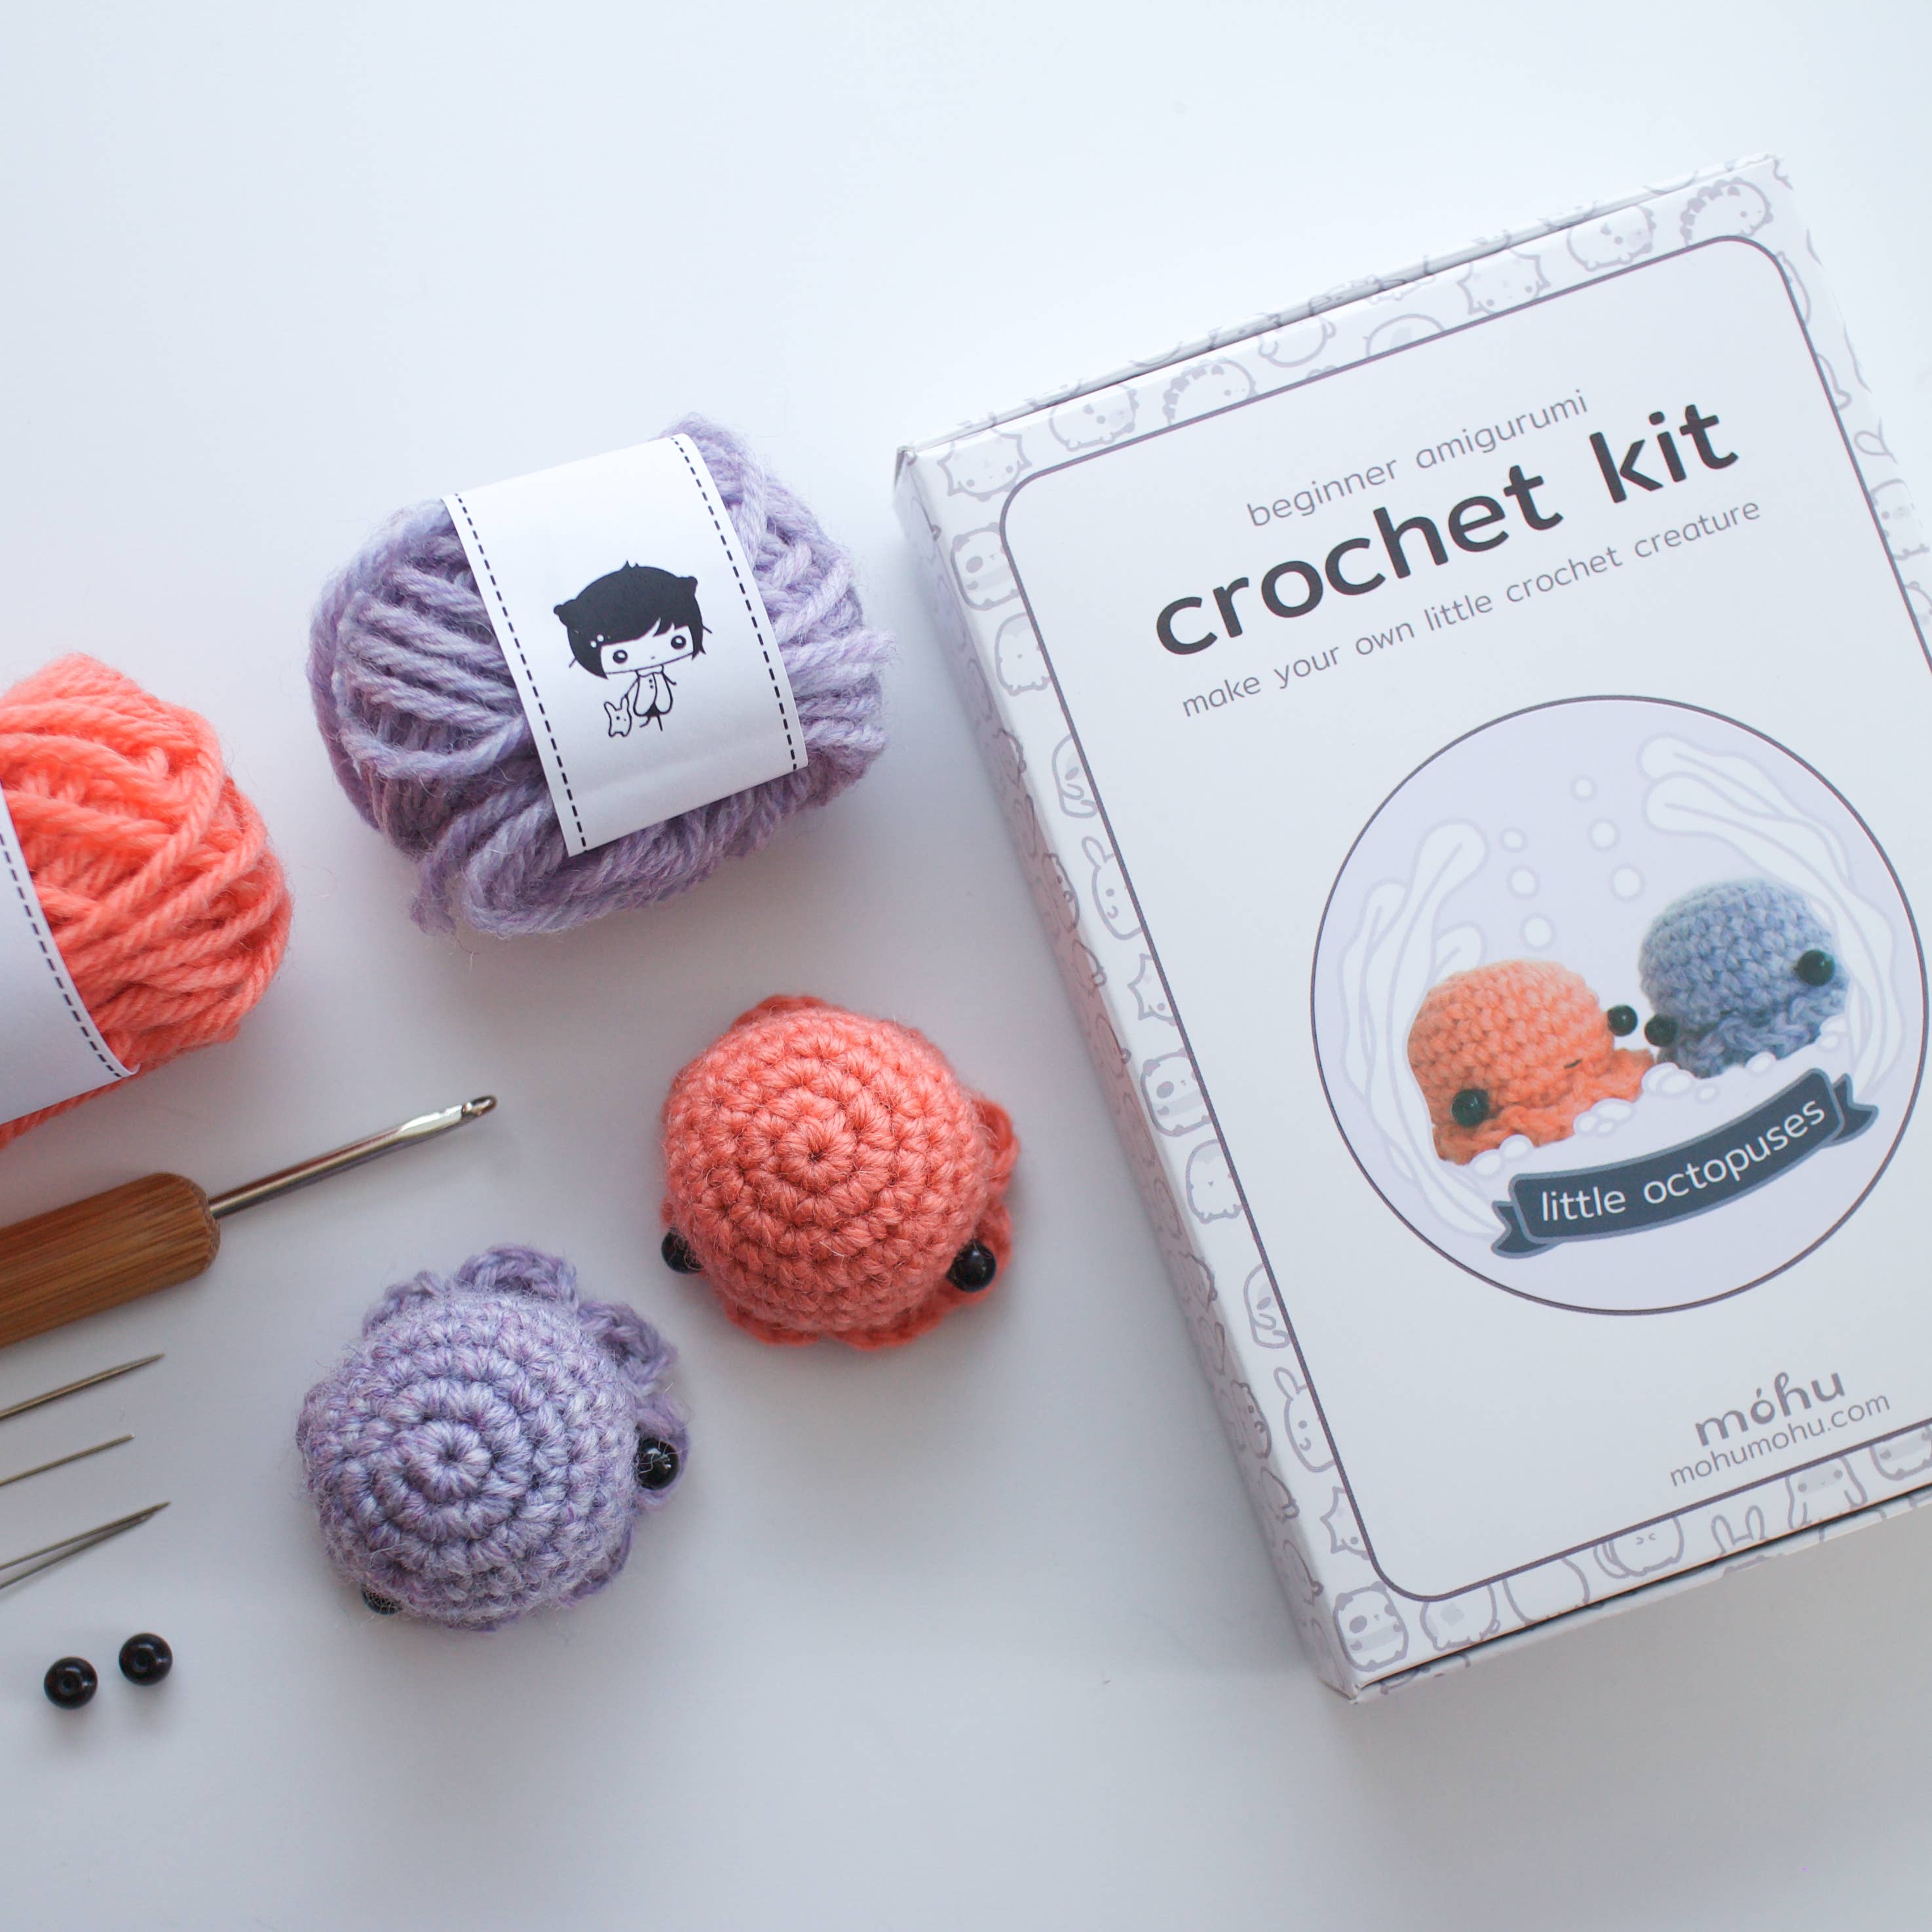 Mohu - Octopus crochet kit - beginner eco-friendly amigurumi kit